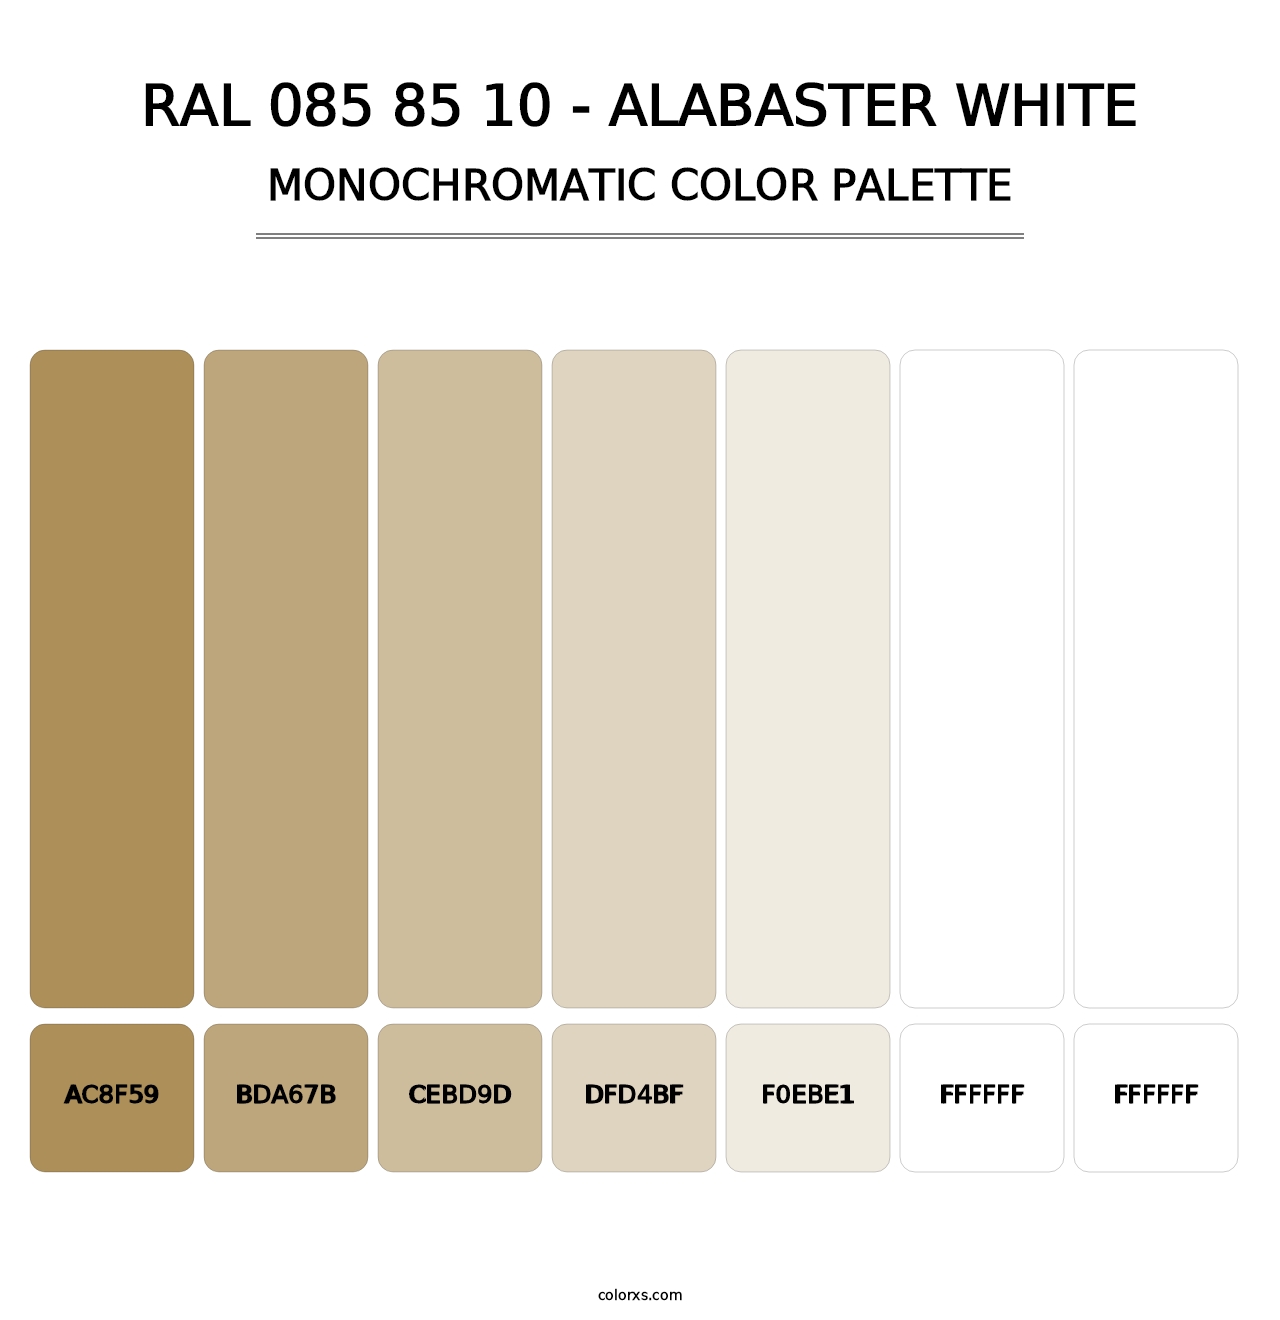 RAL 085 85 10 - Alabaster White - Monochromatic Color Palette